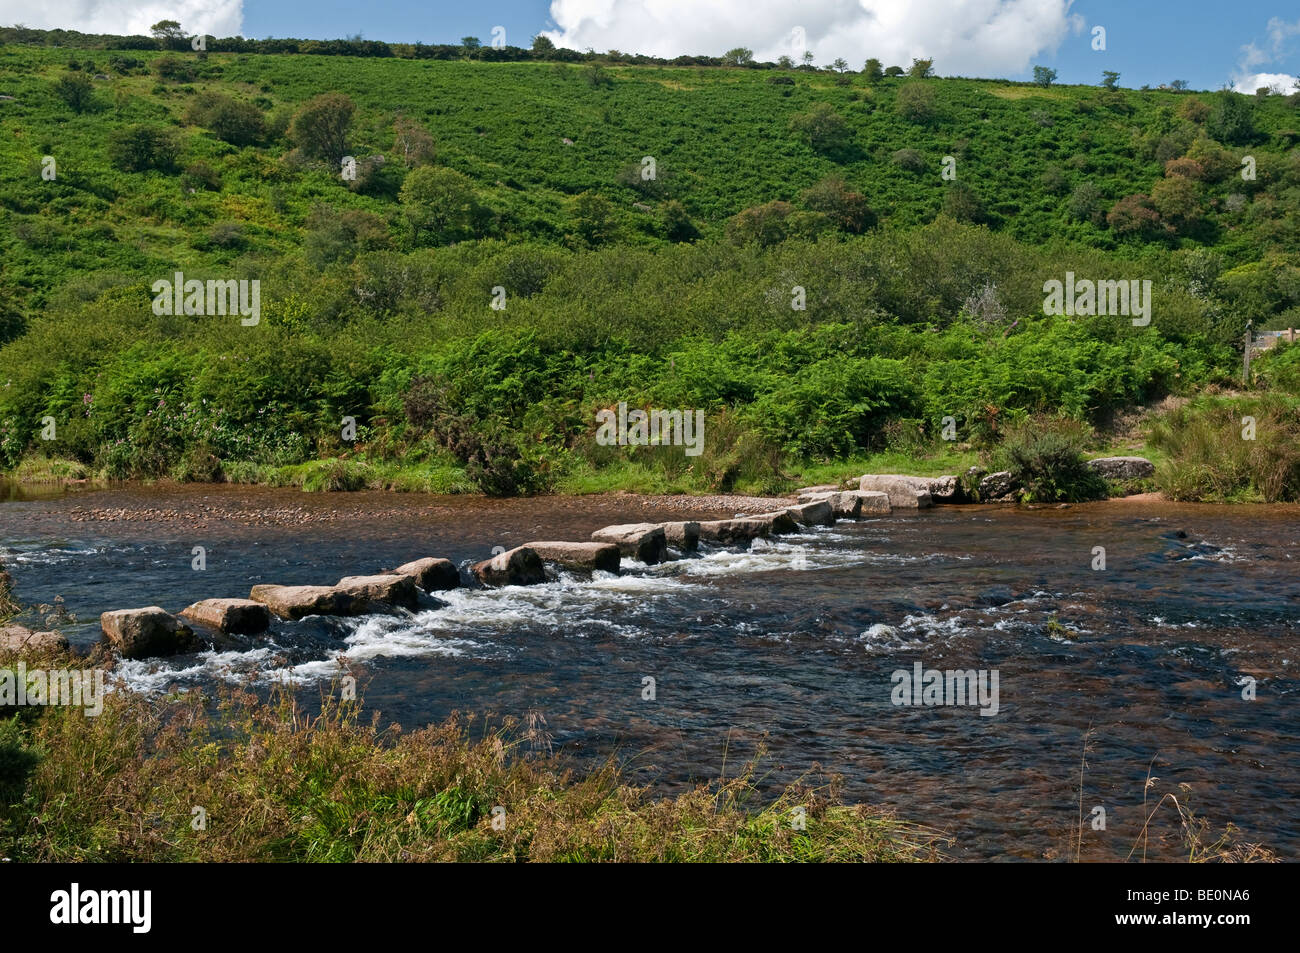 Traditional stone crossing over River, Dartmoor, Devon, England Stock Photo